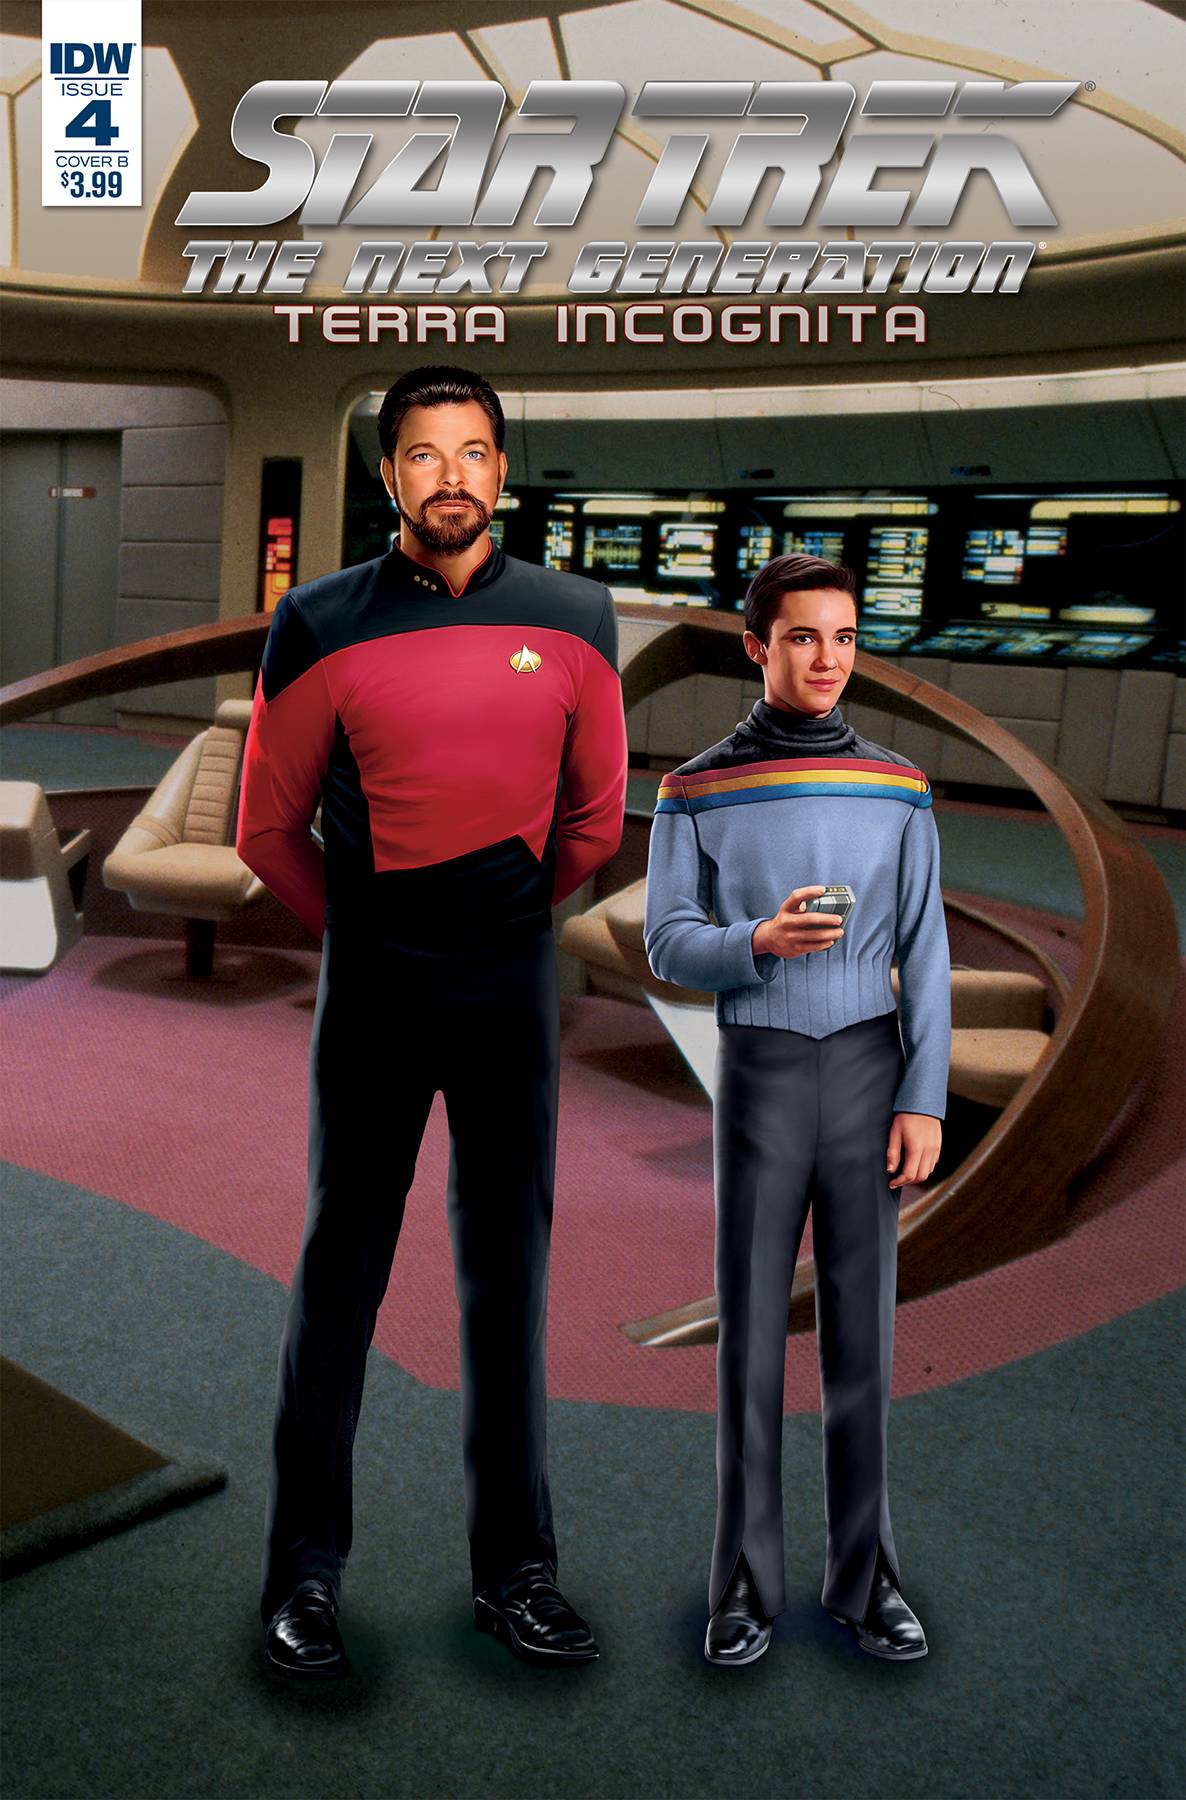 Star Trek Tng Terra Incognita #4 Cover B Photo